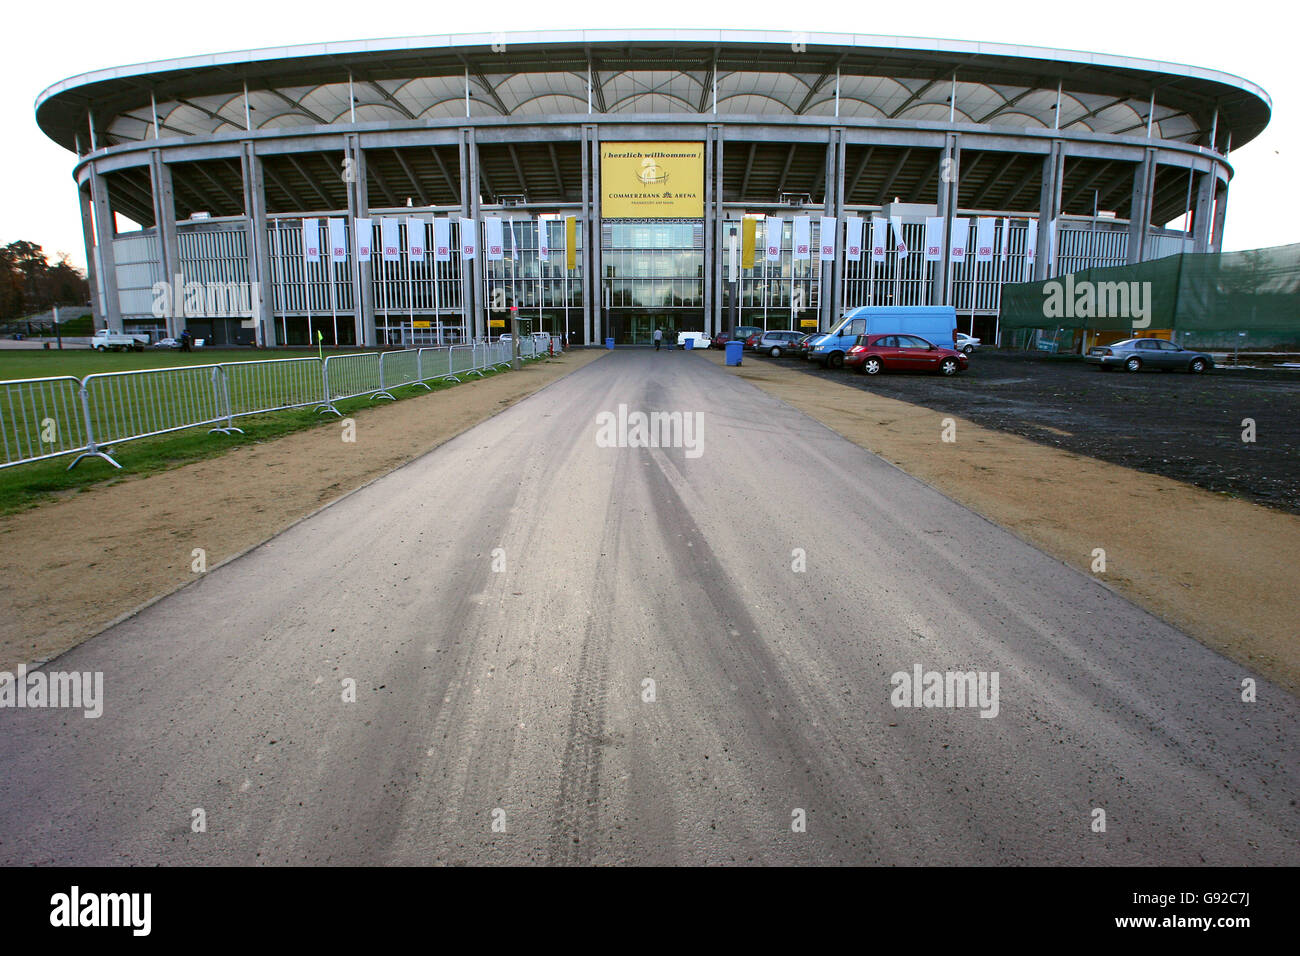 Football - Coupe du Monde FIFA 2006 - stades Commerzbank-Arena - Frankfurt Banque D'Images